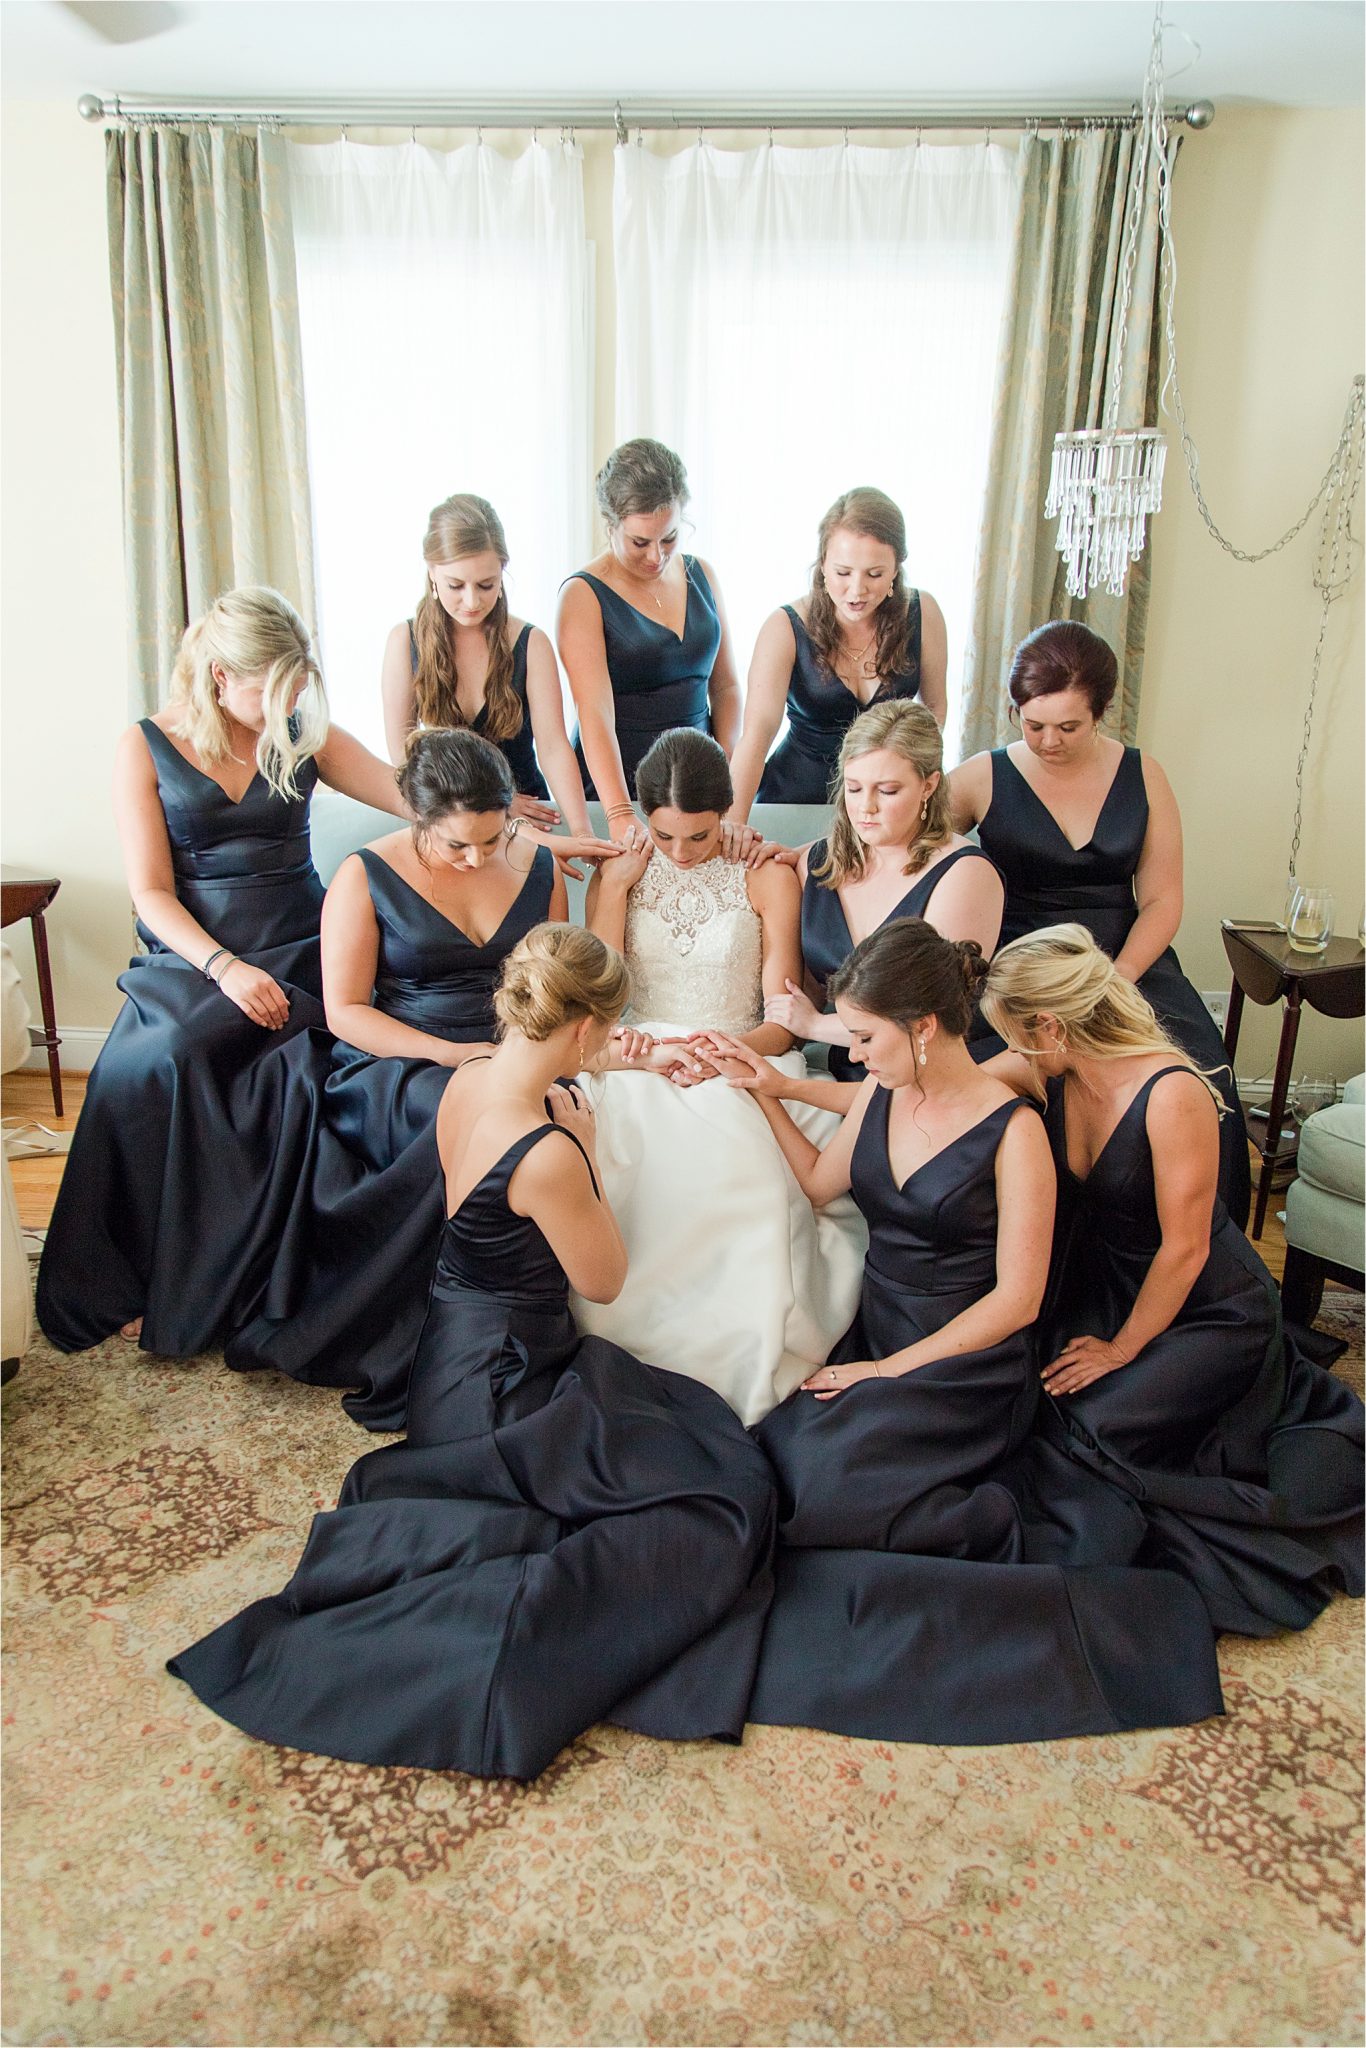 Sonnet House, Birmingham Alabama Wedding Photographer, Bridal portrait, Bride and bridesmaids